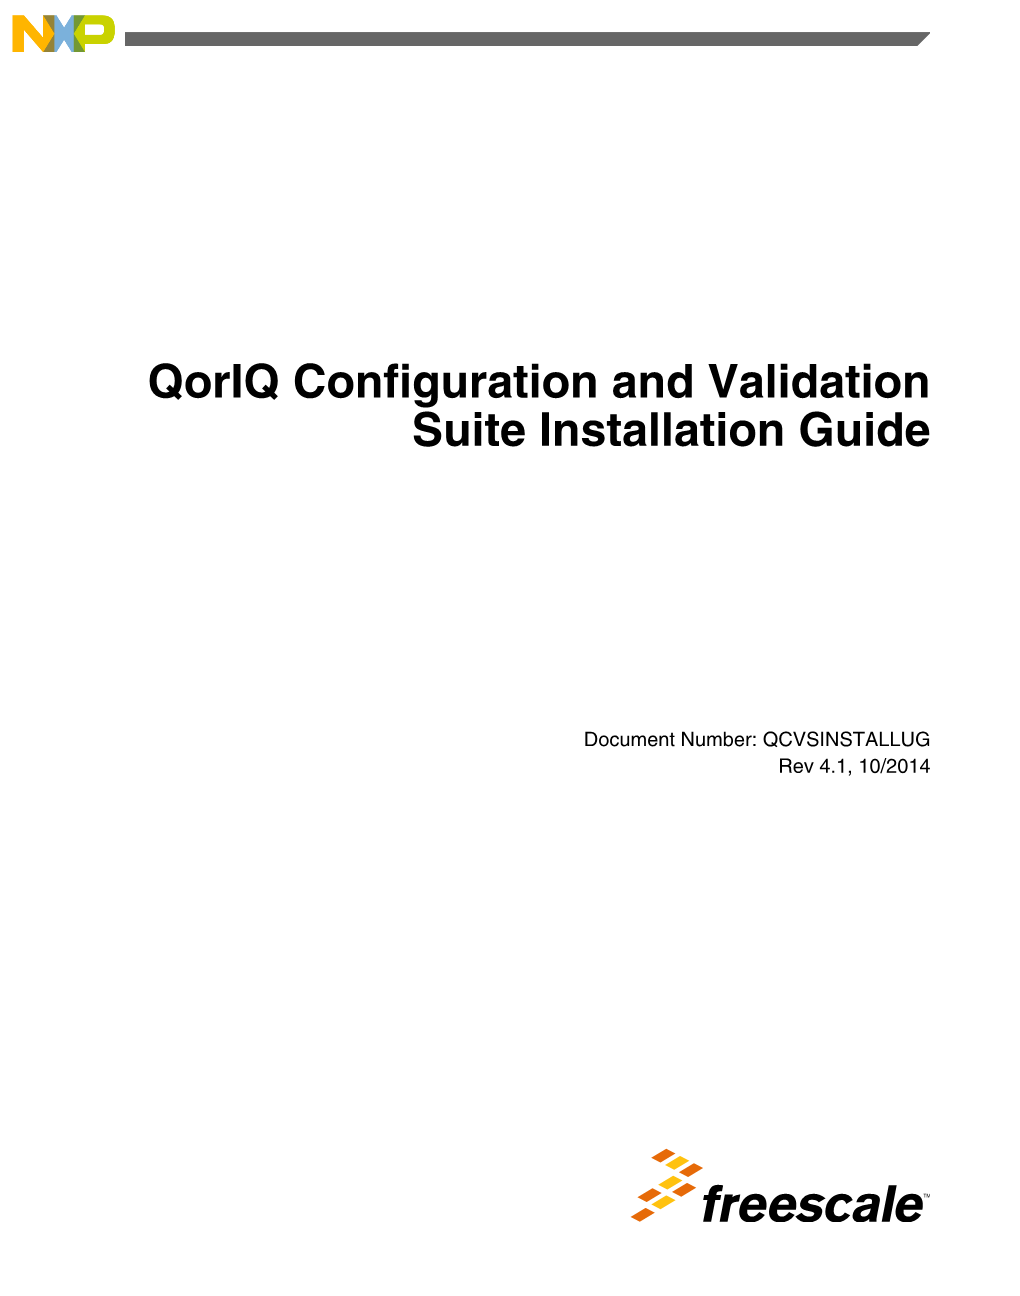 Qoriq Configuration and Validation Suite Installation Guide